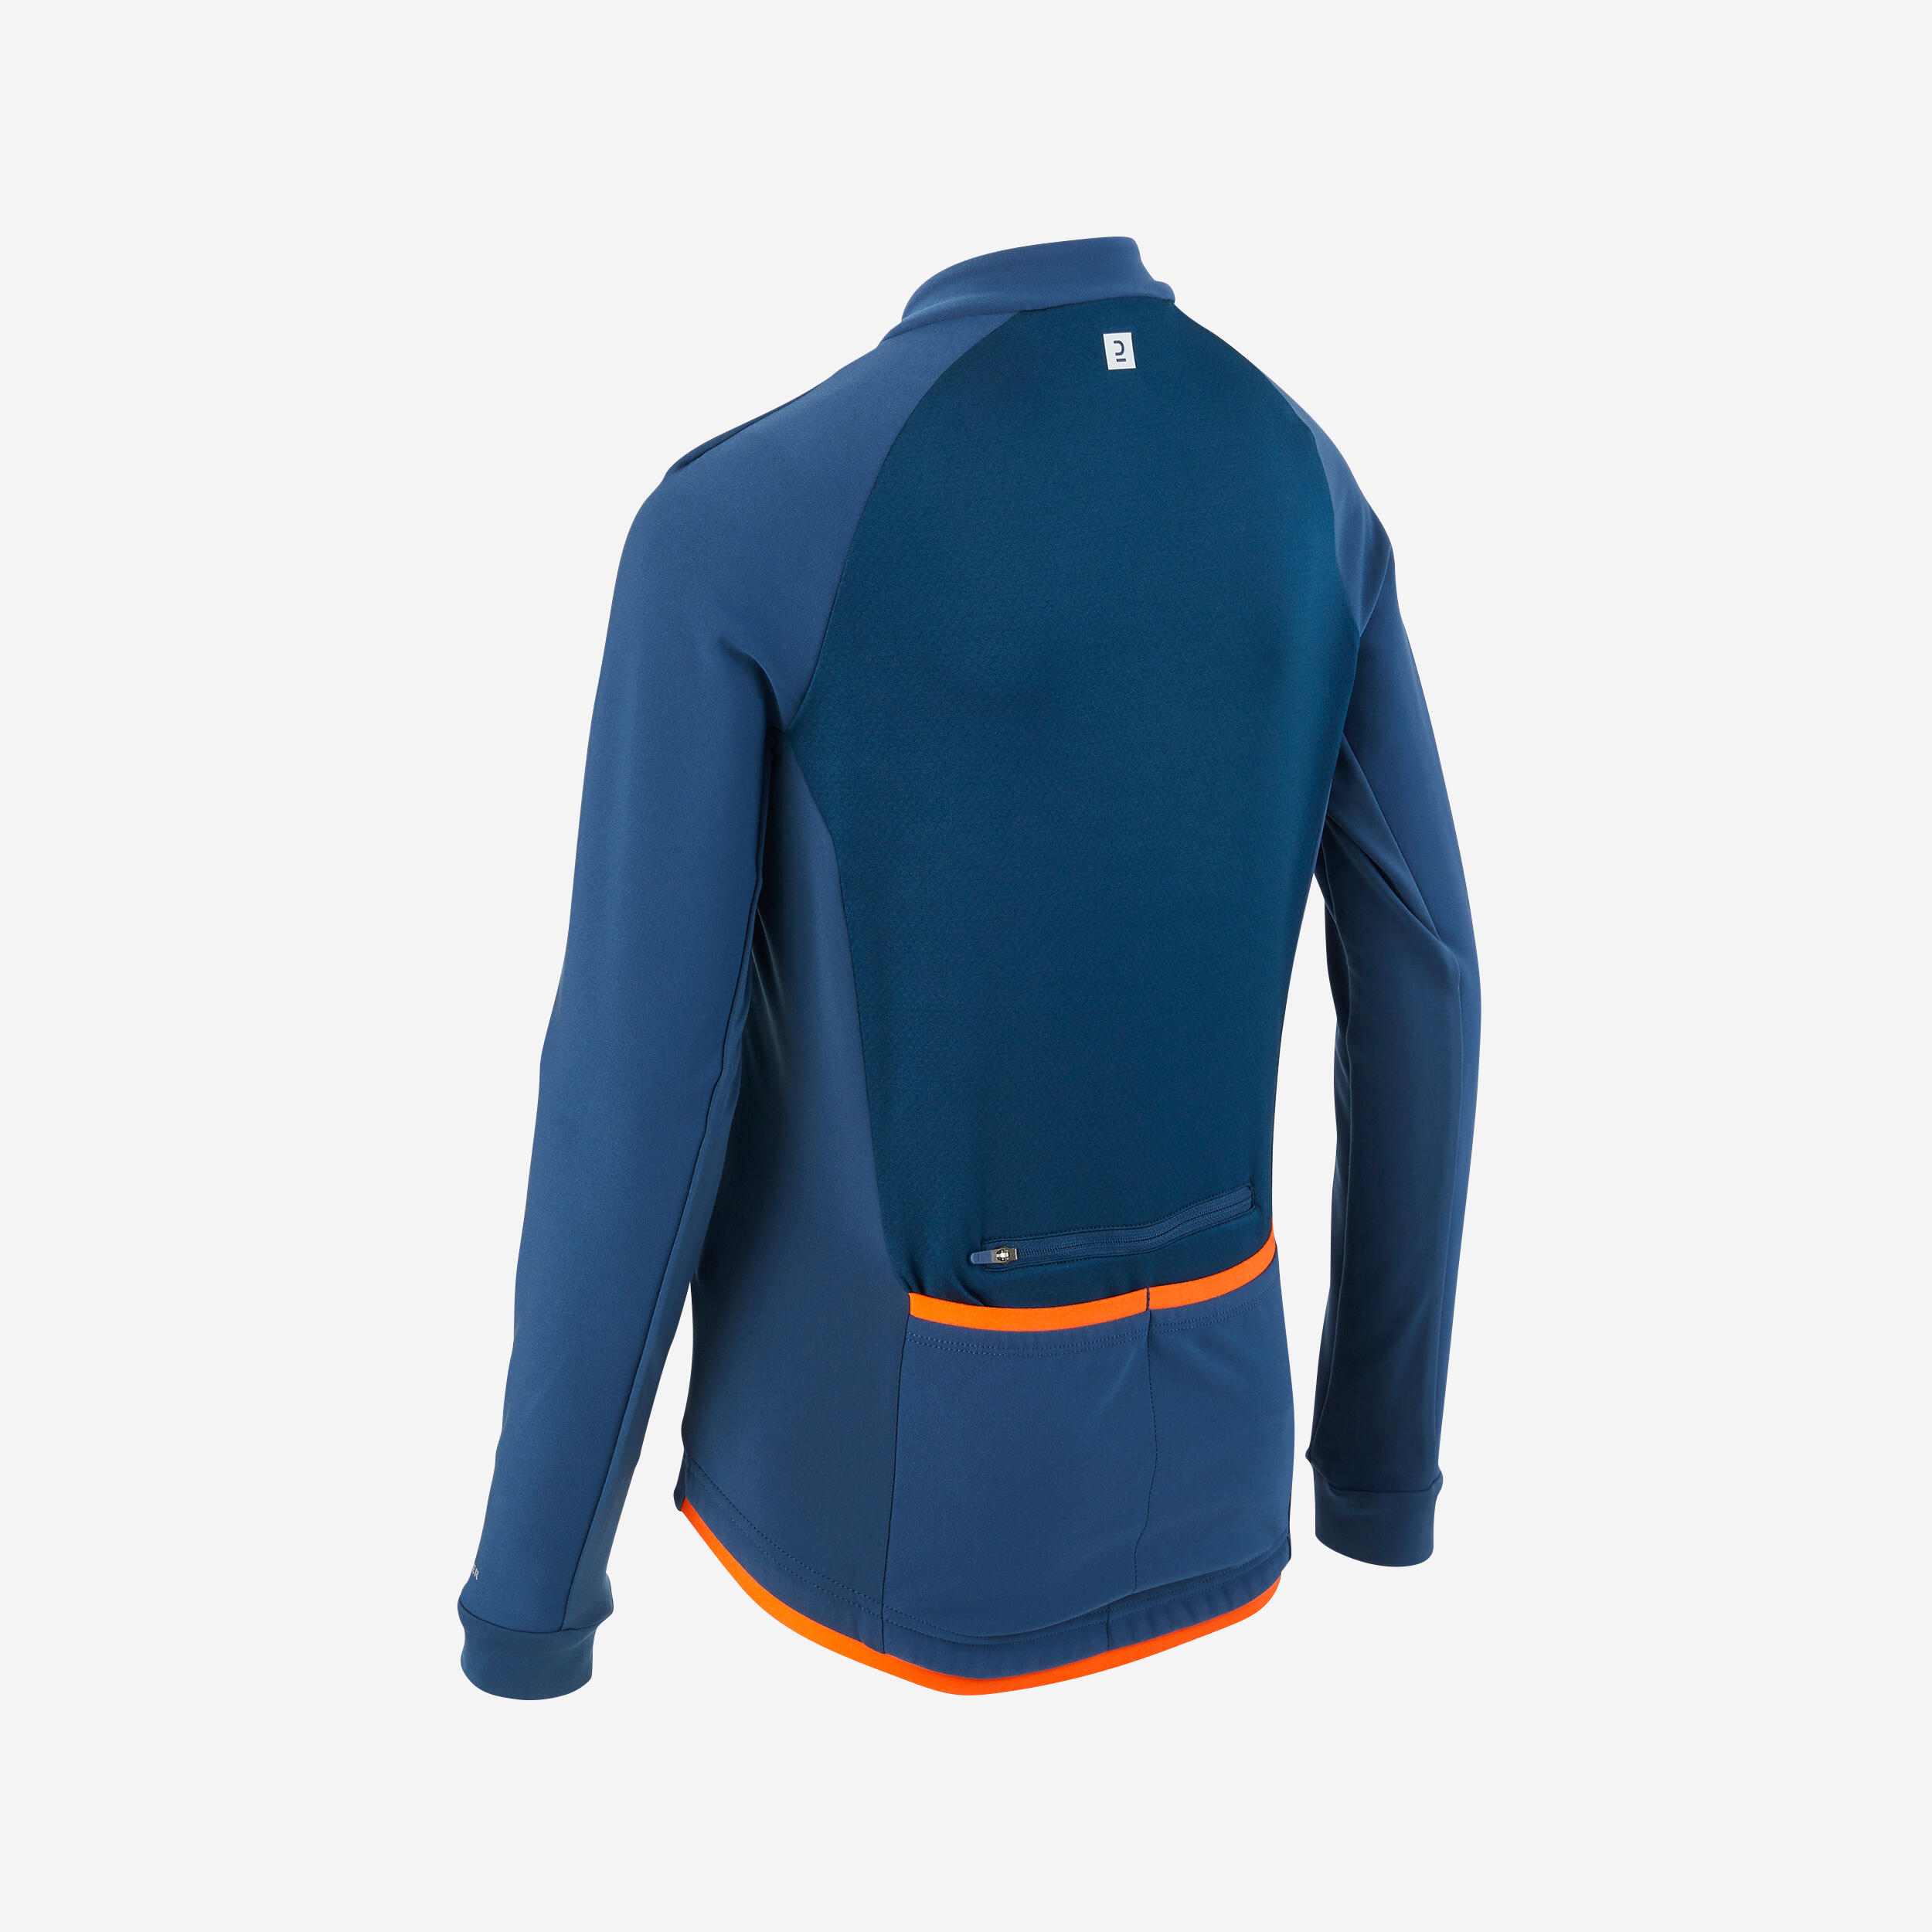 Kids' Cycling Jacket 500 - Blue/Orange 2/4